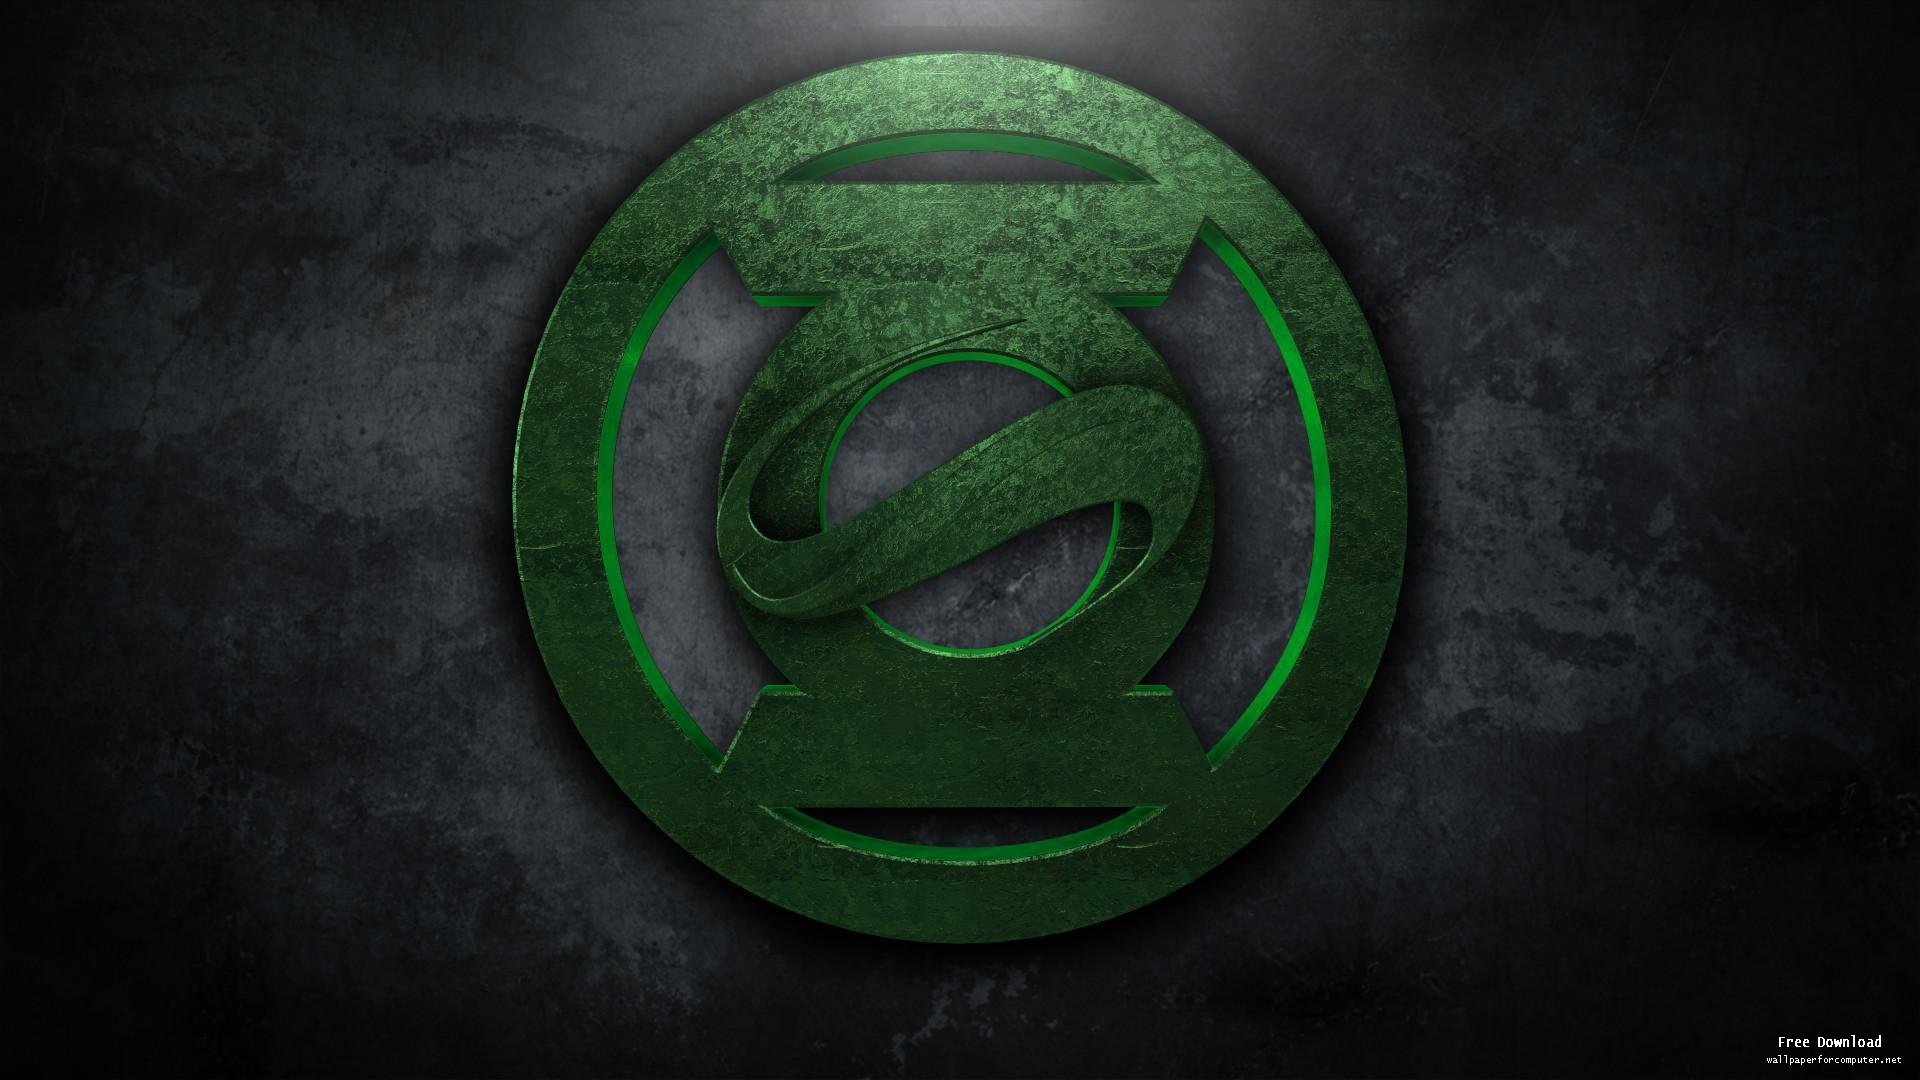 Green Lantern logo Wallpaper Iphone 1920x1080